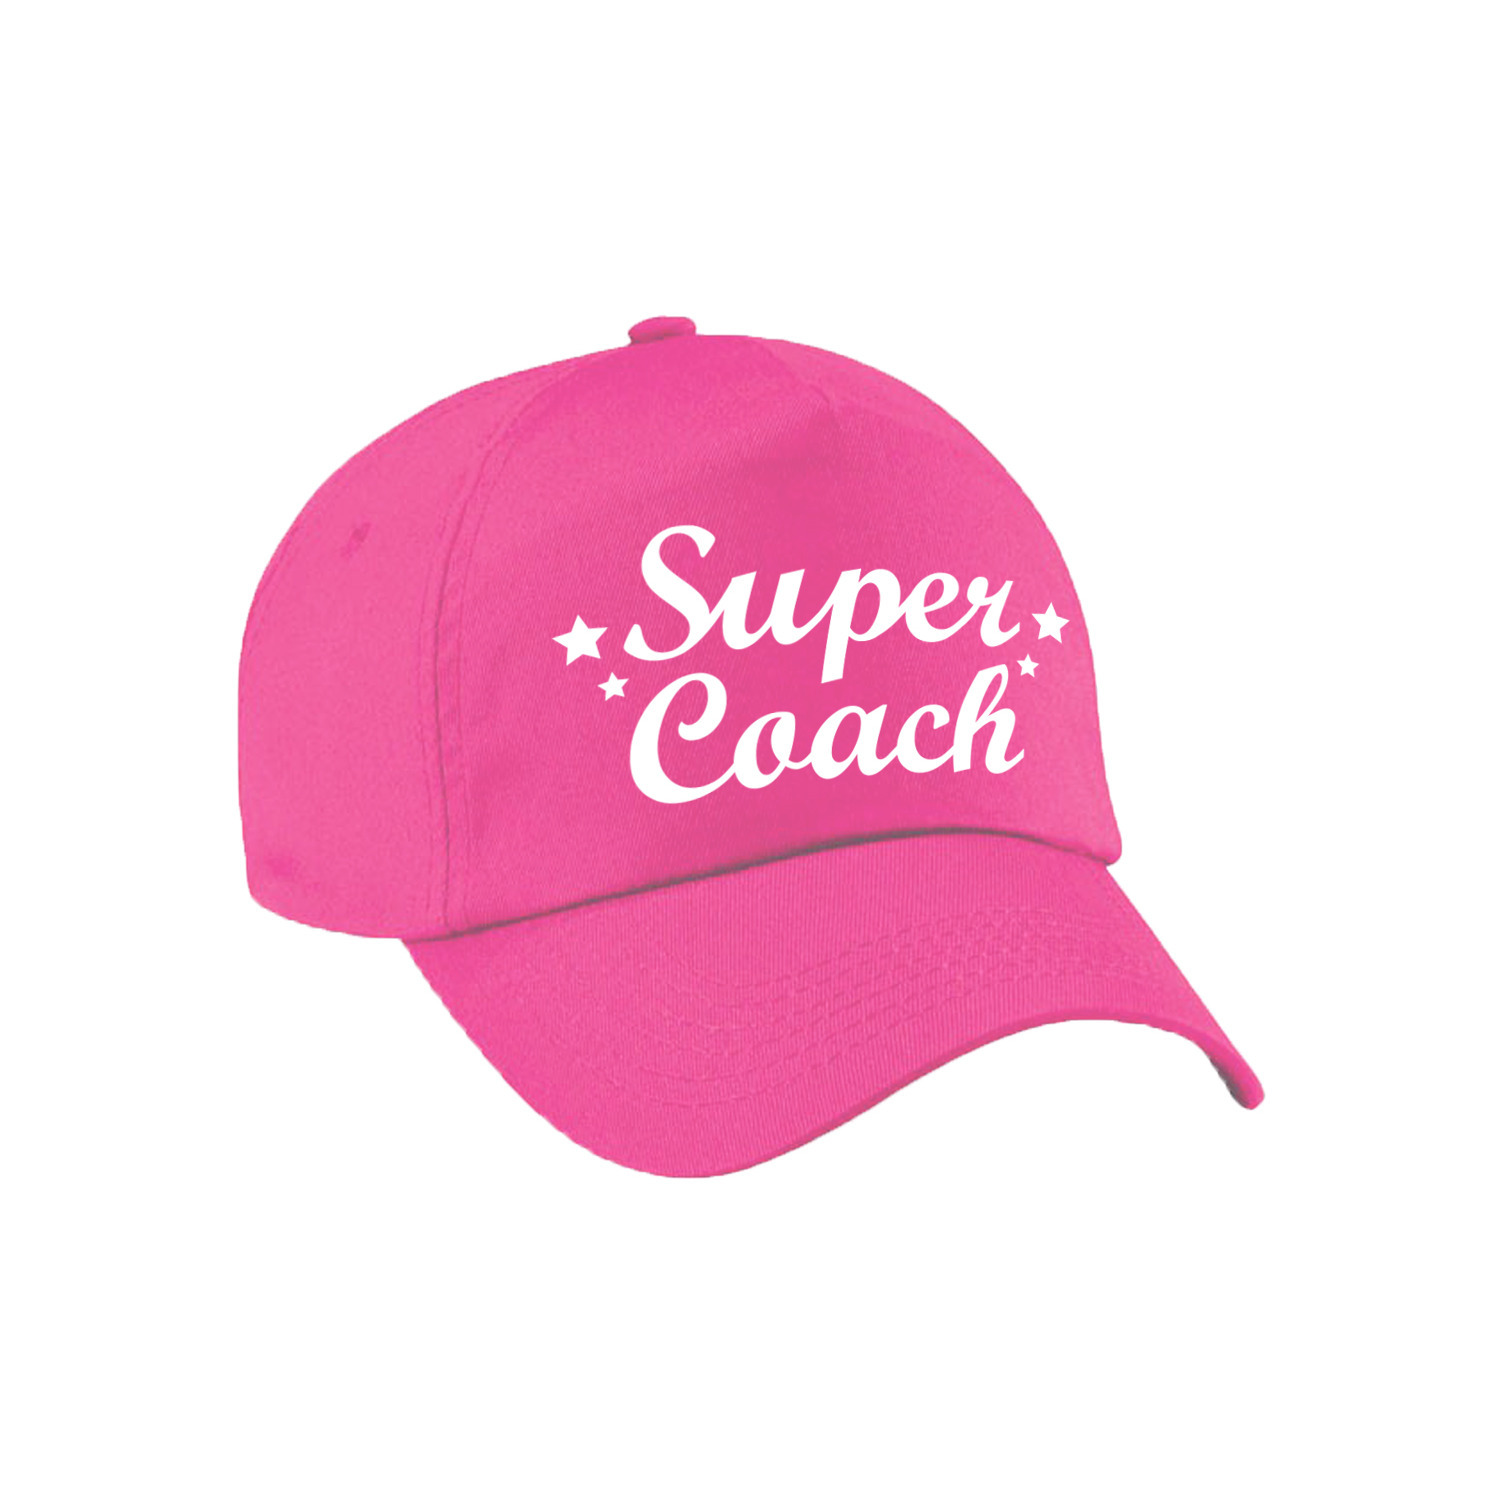 Super coach cadeau pet -cap roze voor volwassenen